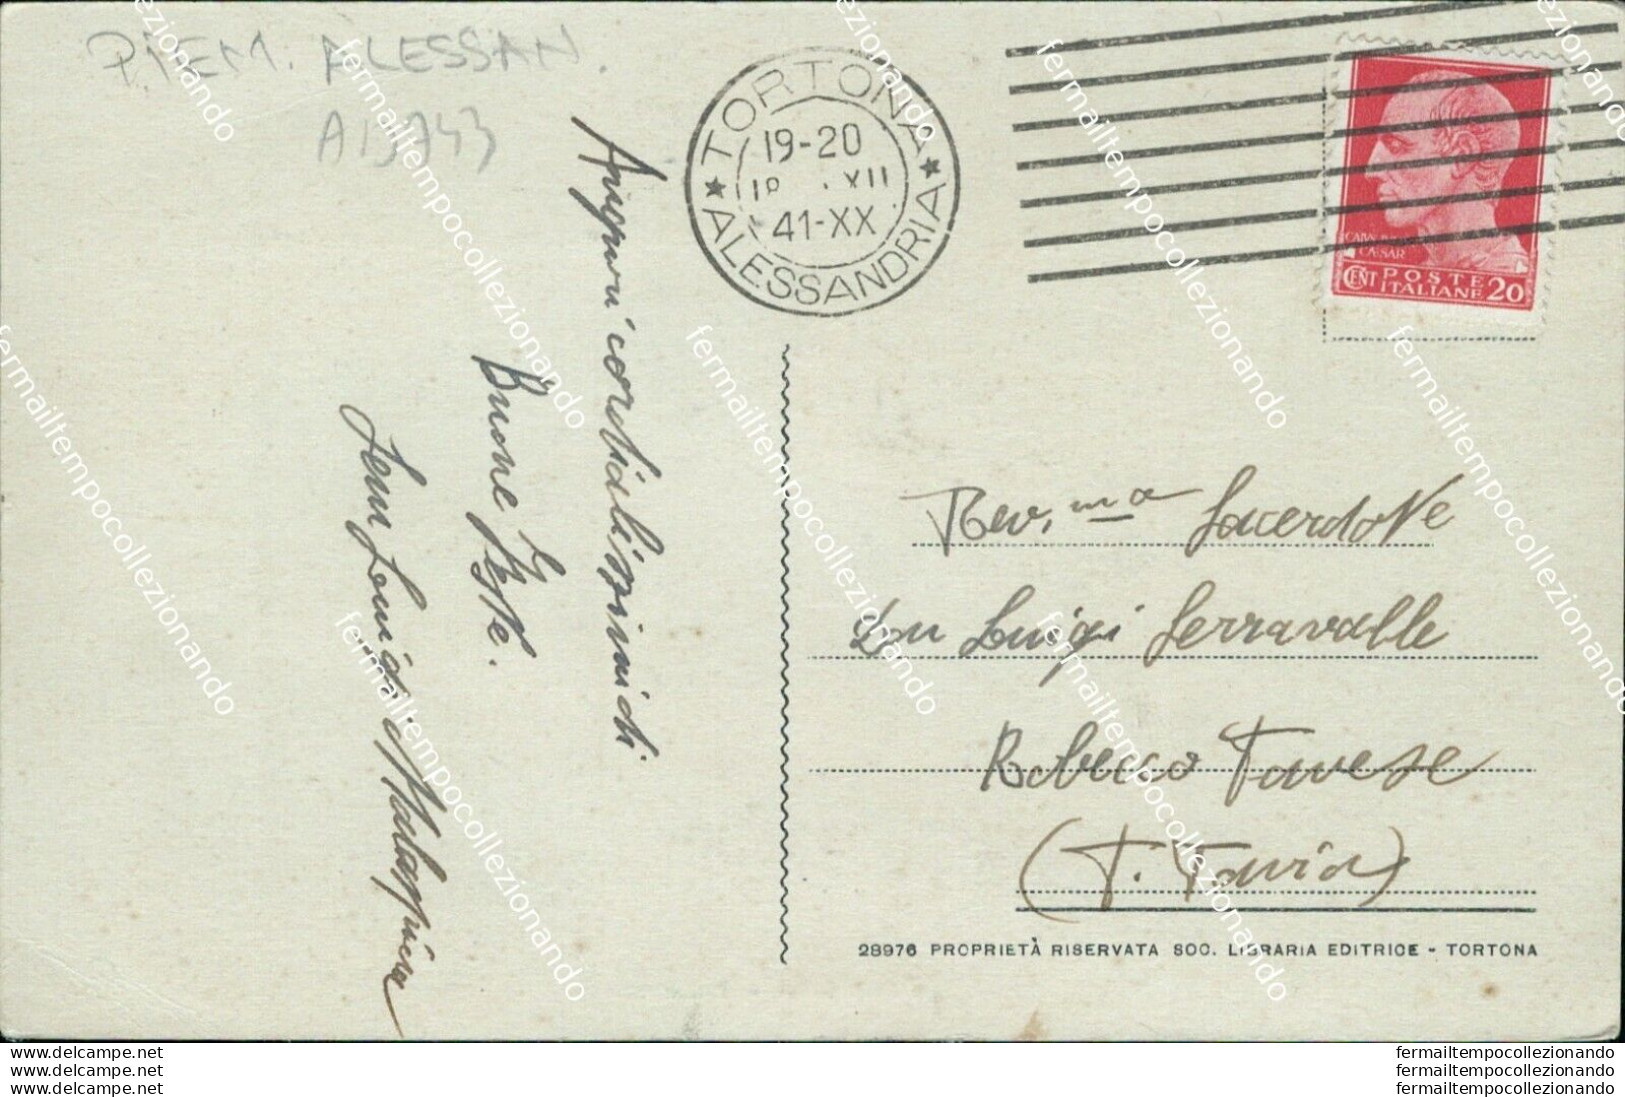 Ad743  Cartolina Tortona Giardini 1941 Provincia Di Alessandria - Alessandria